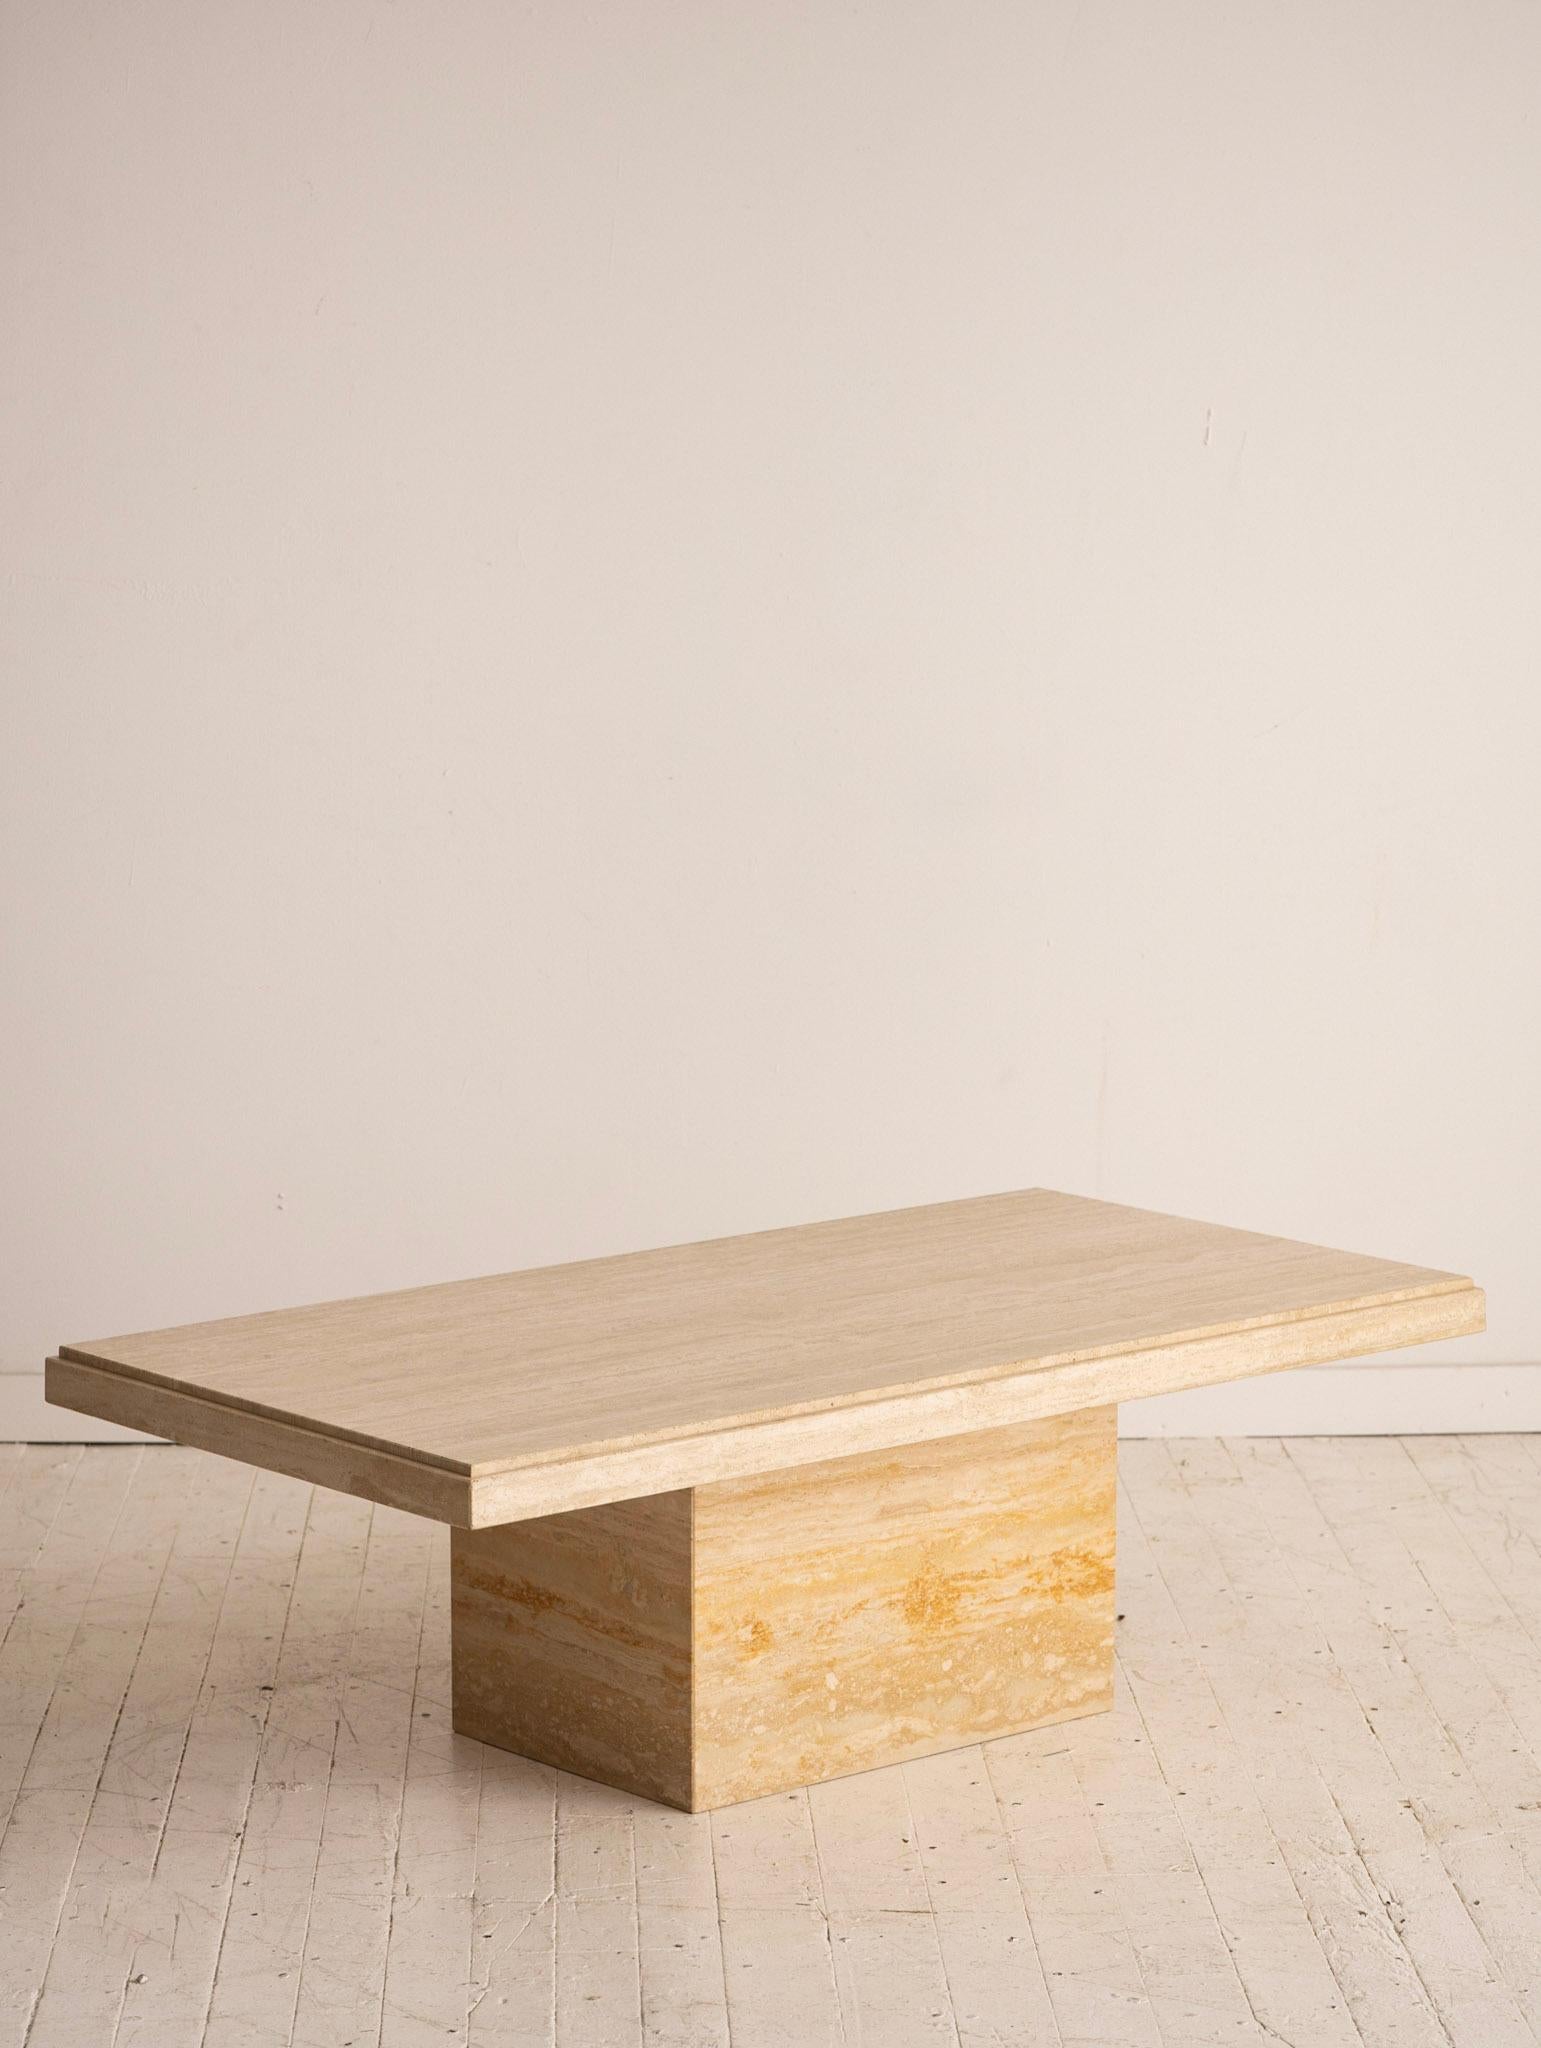 1980s Italian Travertine coffee table. Rectangular slab sits on top of a hollow travertine plinth base.